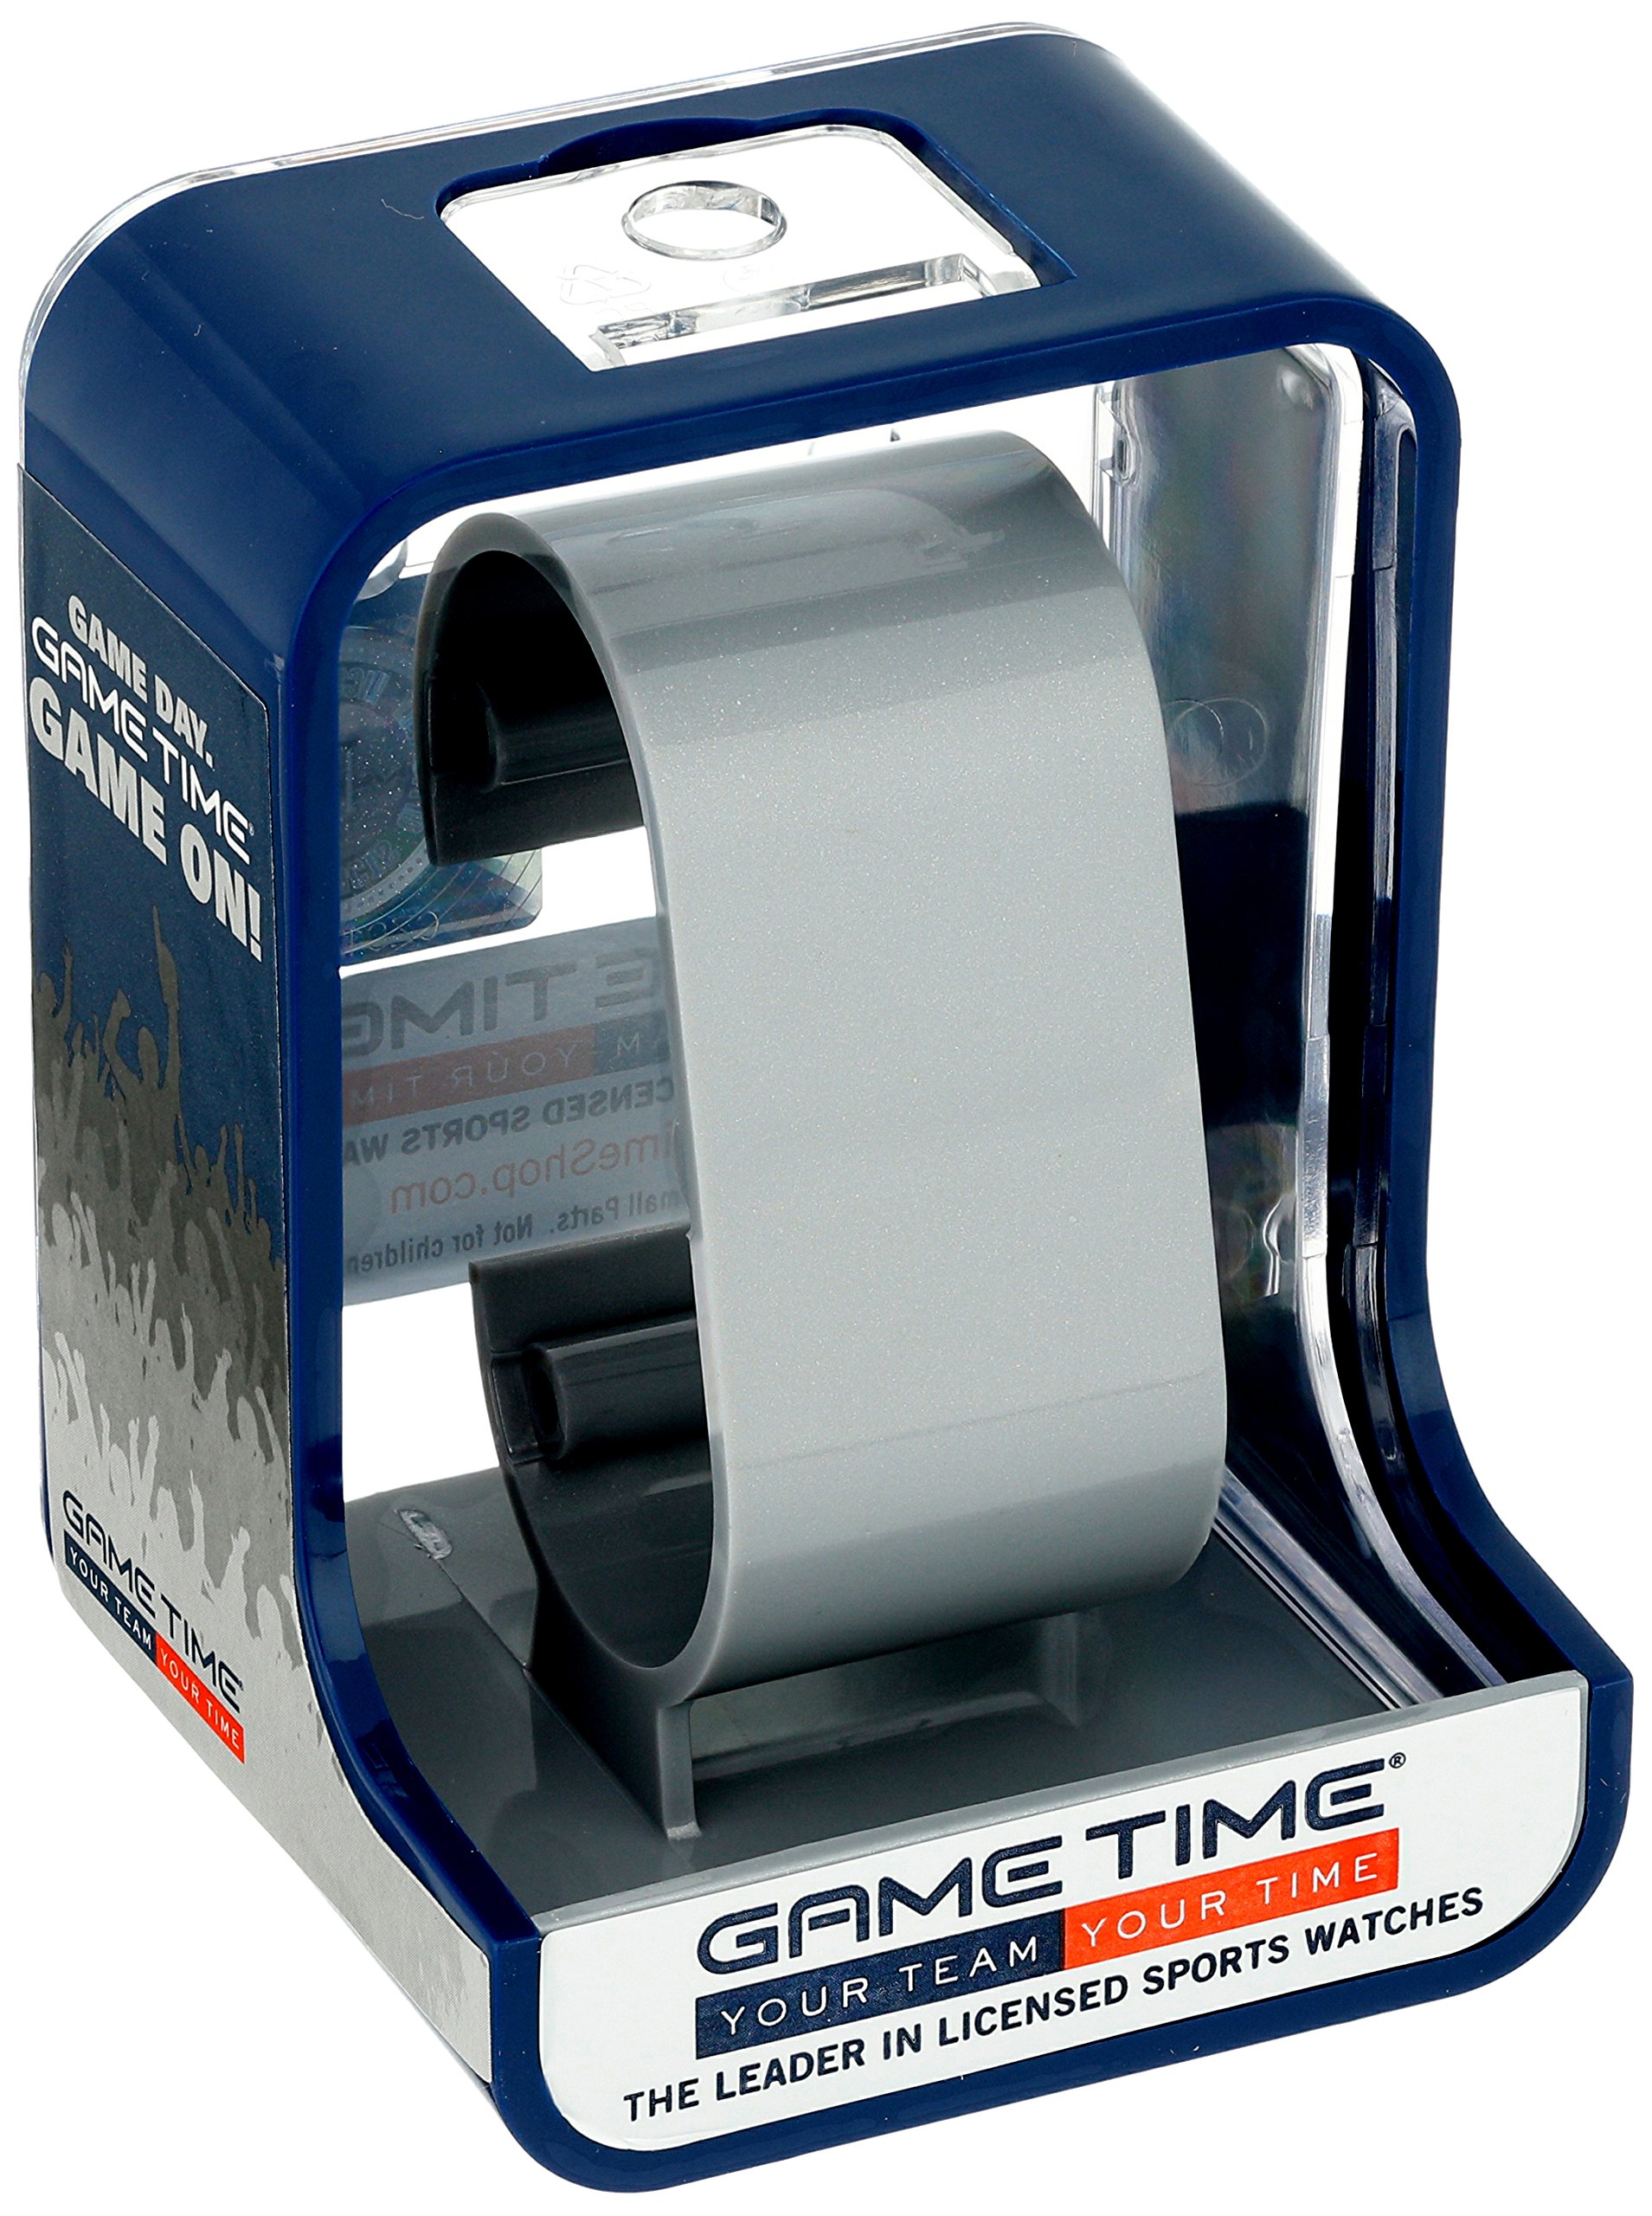 Game Time Men's 'Starter' Metal and Nylon Quartz Analog Watch, Color:Black (Model: NBA-STA-IND)